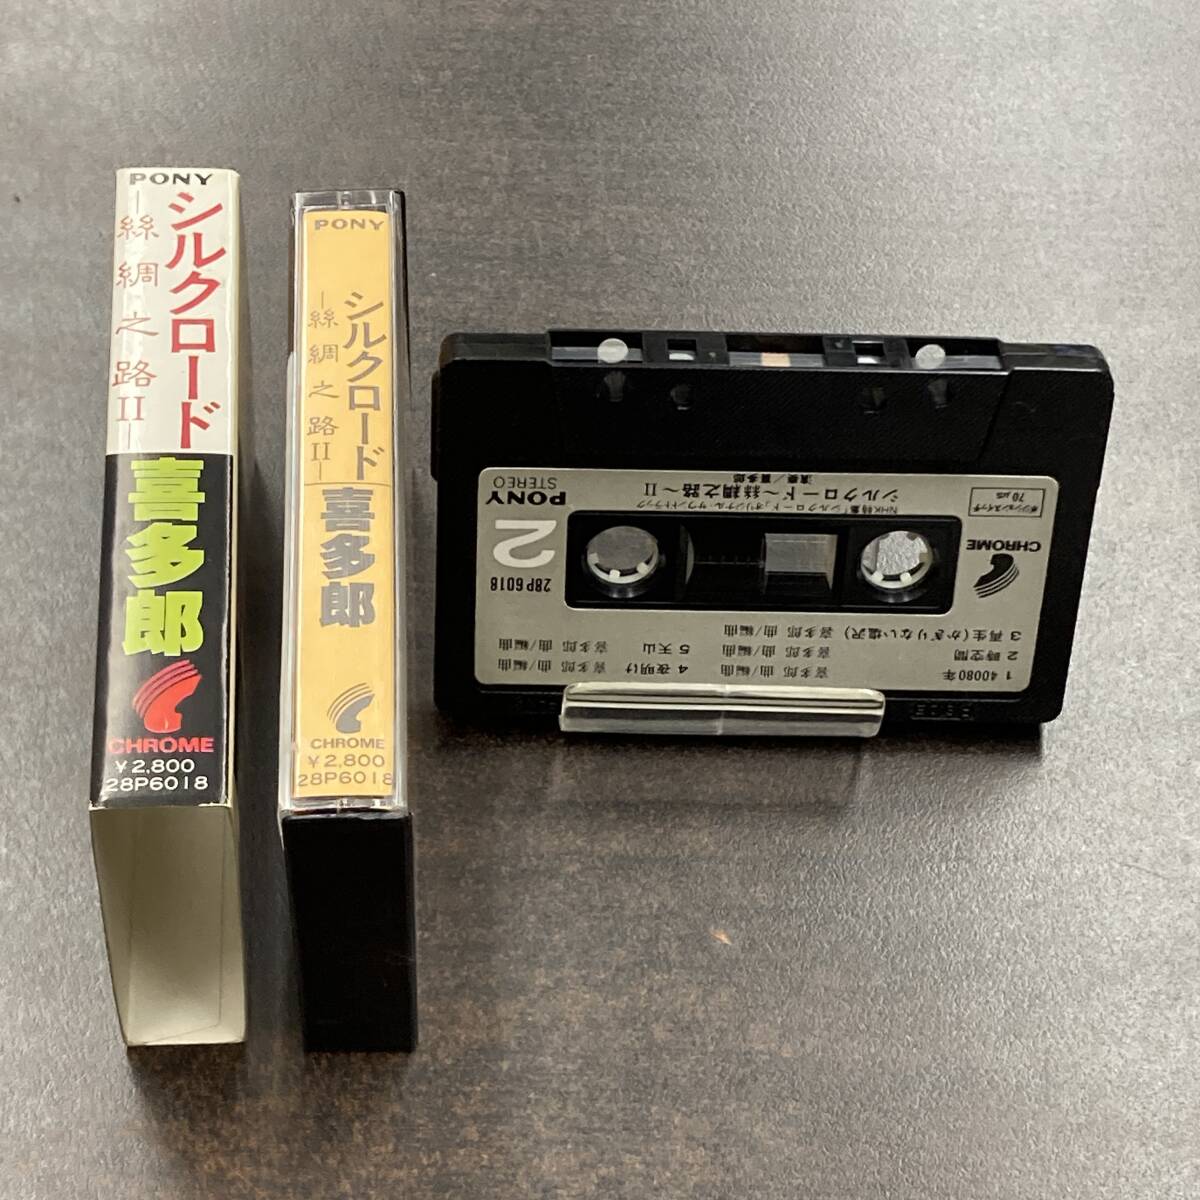 1065M 喜多郎 シルクロード  絲綢之路 カセットテープ / KITARO Soundtrack Cassette Tapeの画像3